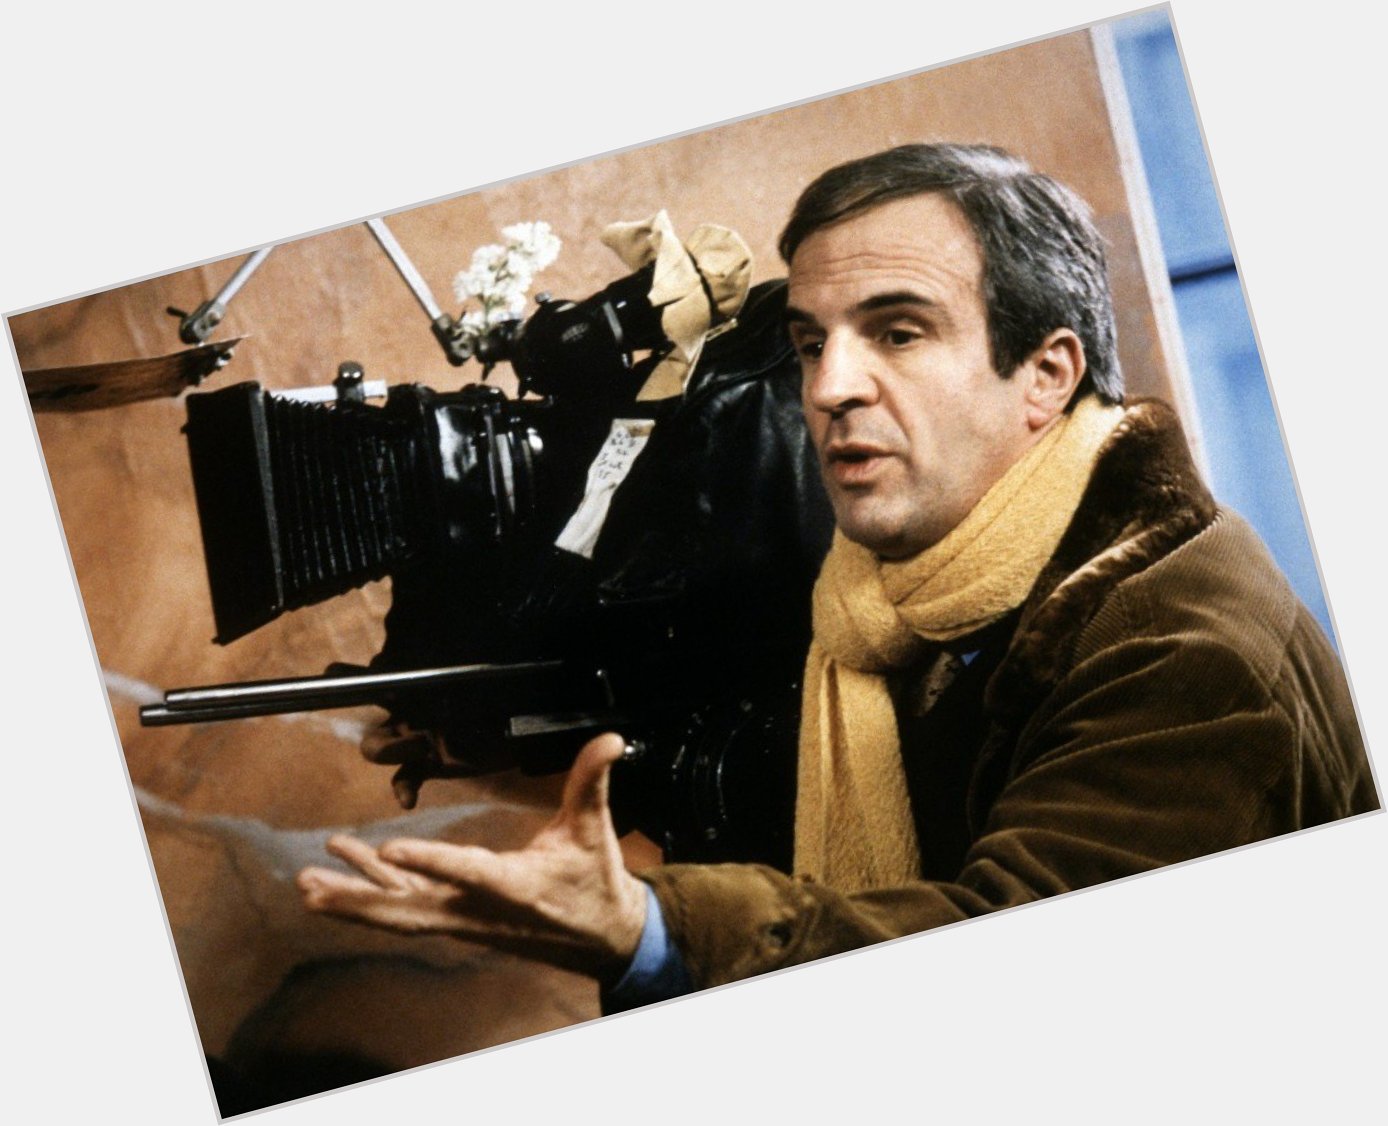 Happy Birthday, Francois Truffaut! Born 6 February 1932 Died 21 October 1984 